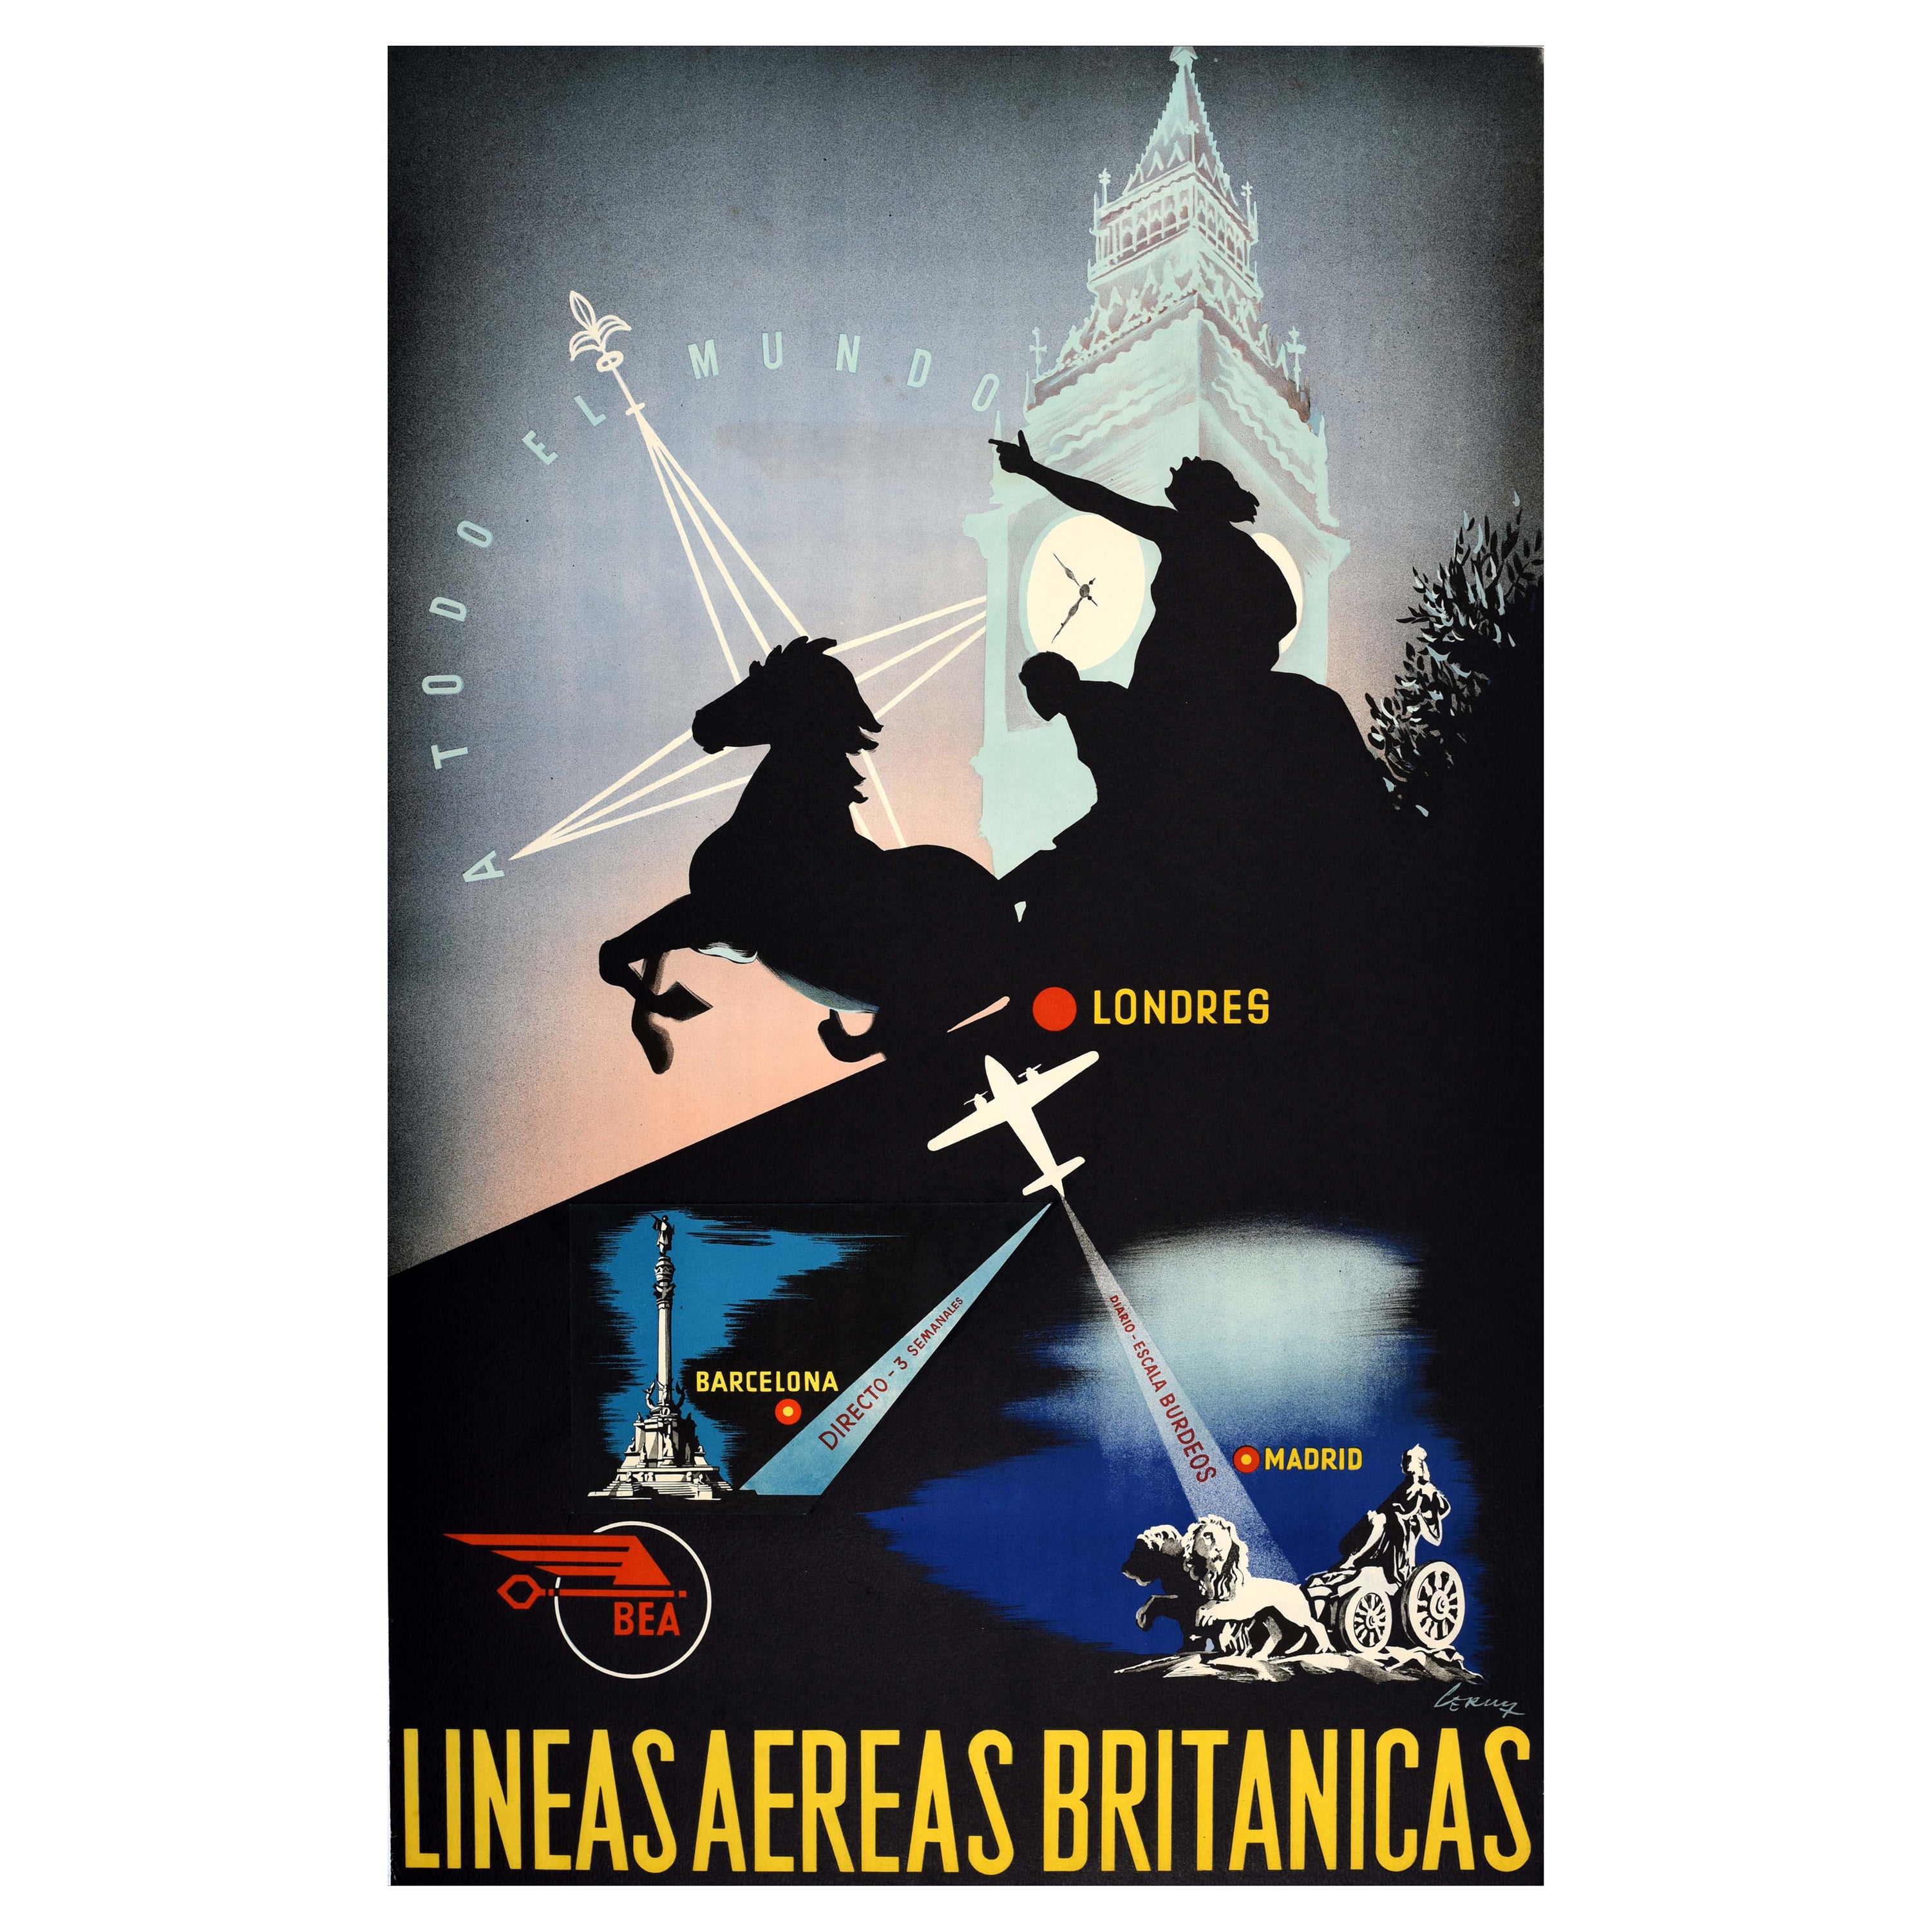 Original Vintage Travel Advertising Poster BEA Lineas Aereas Britanicas London For Sale